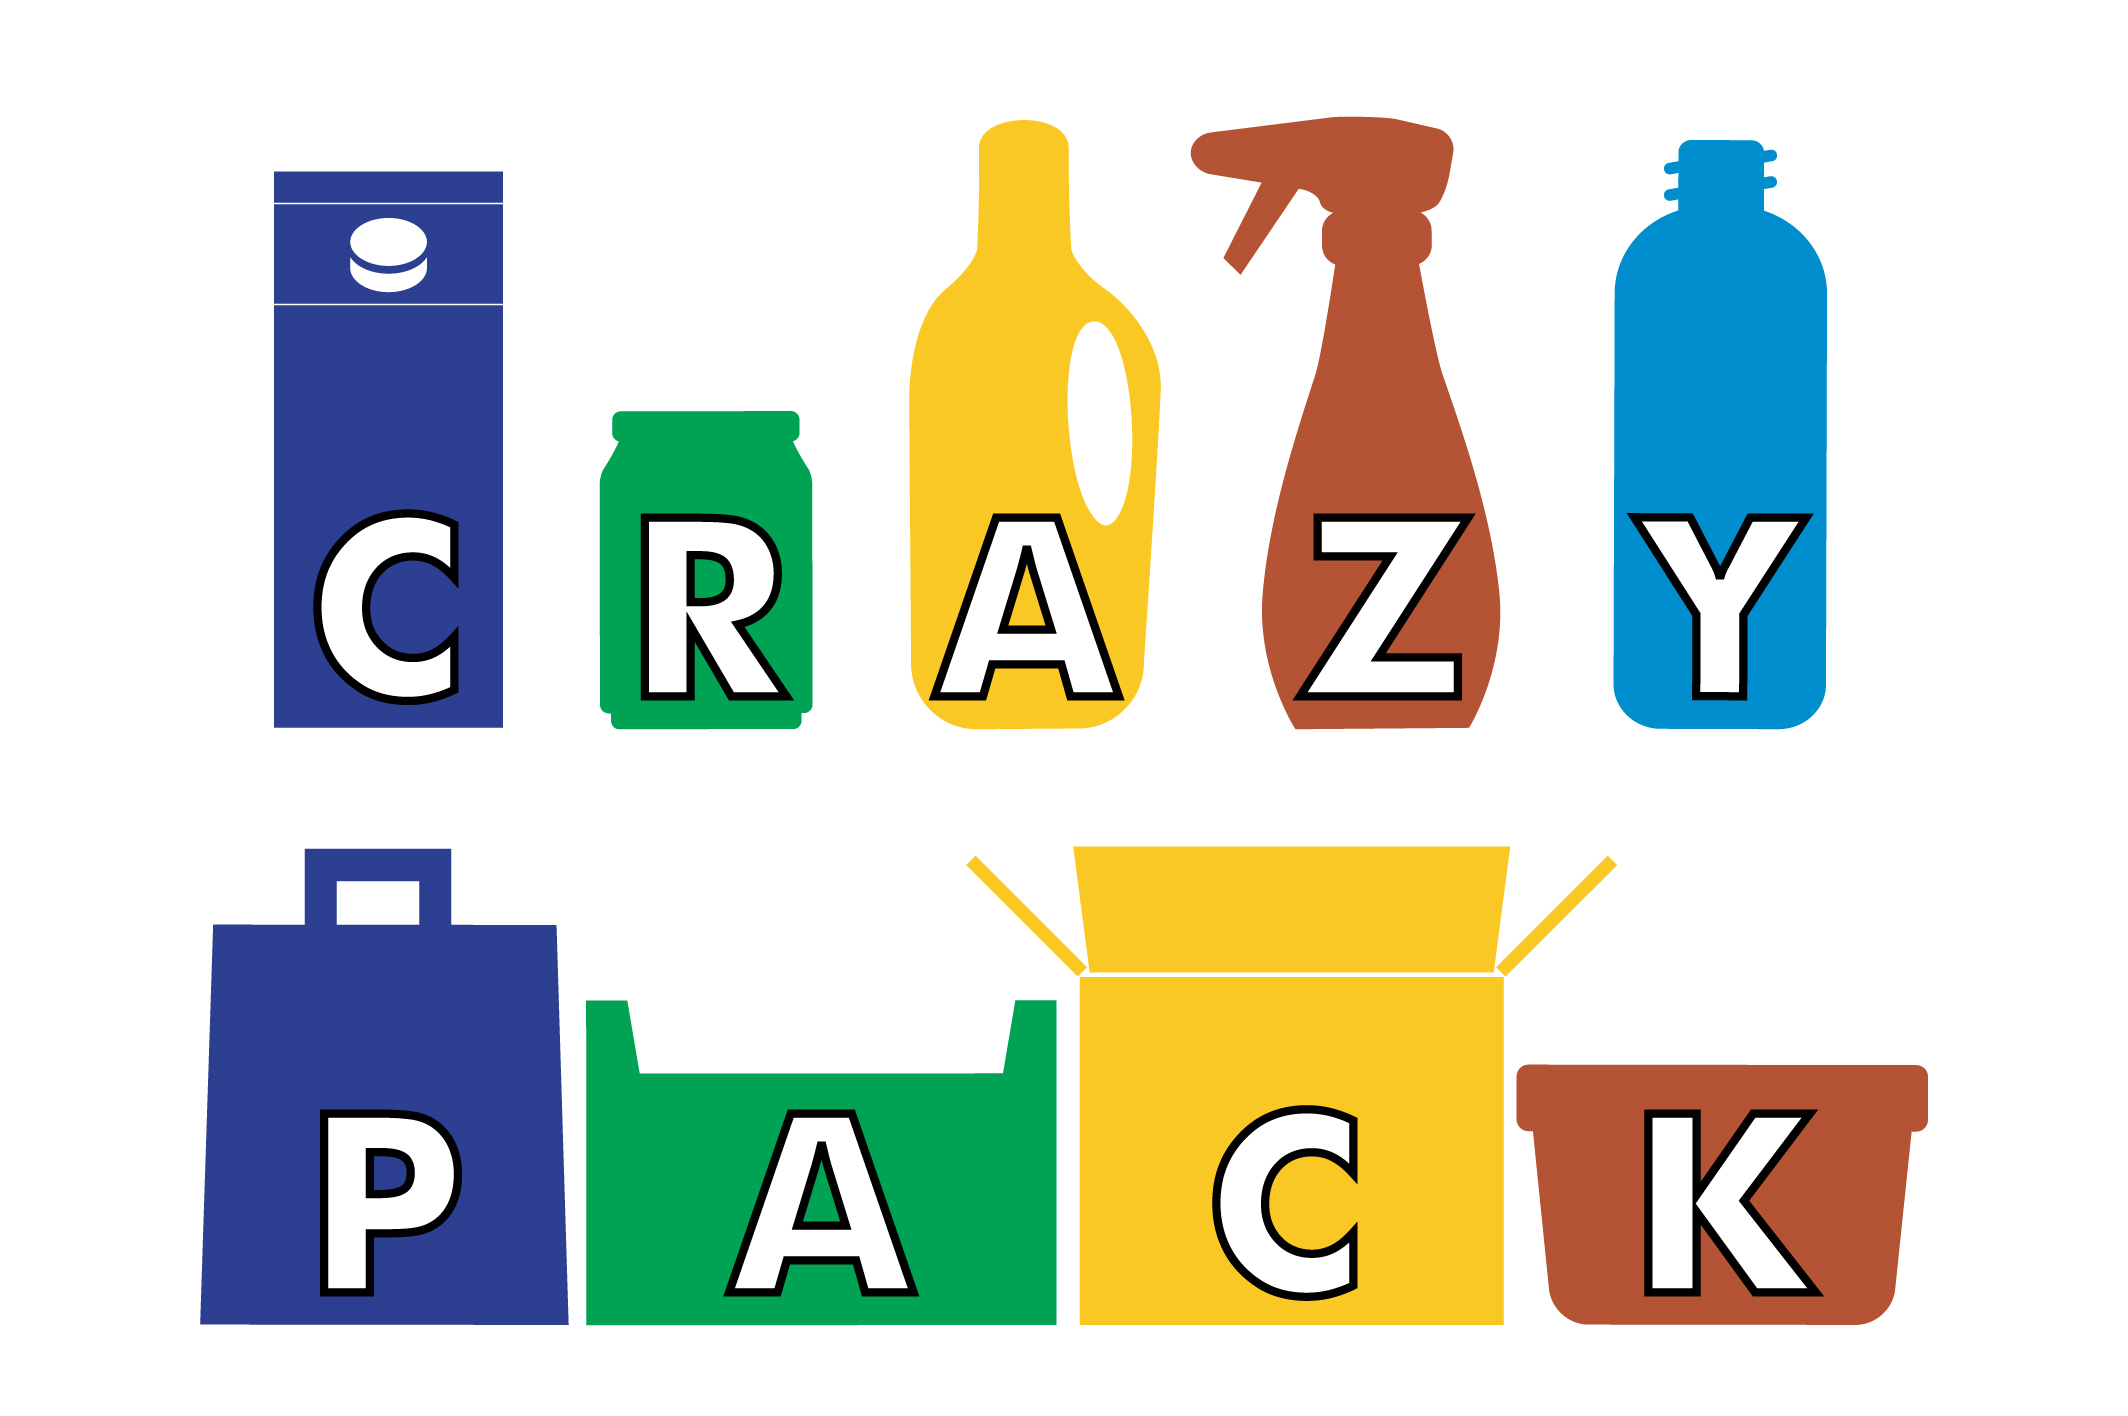 Crazy_Pack_Logo_verticale.jpg